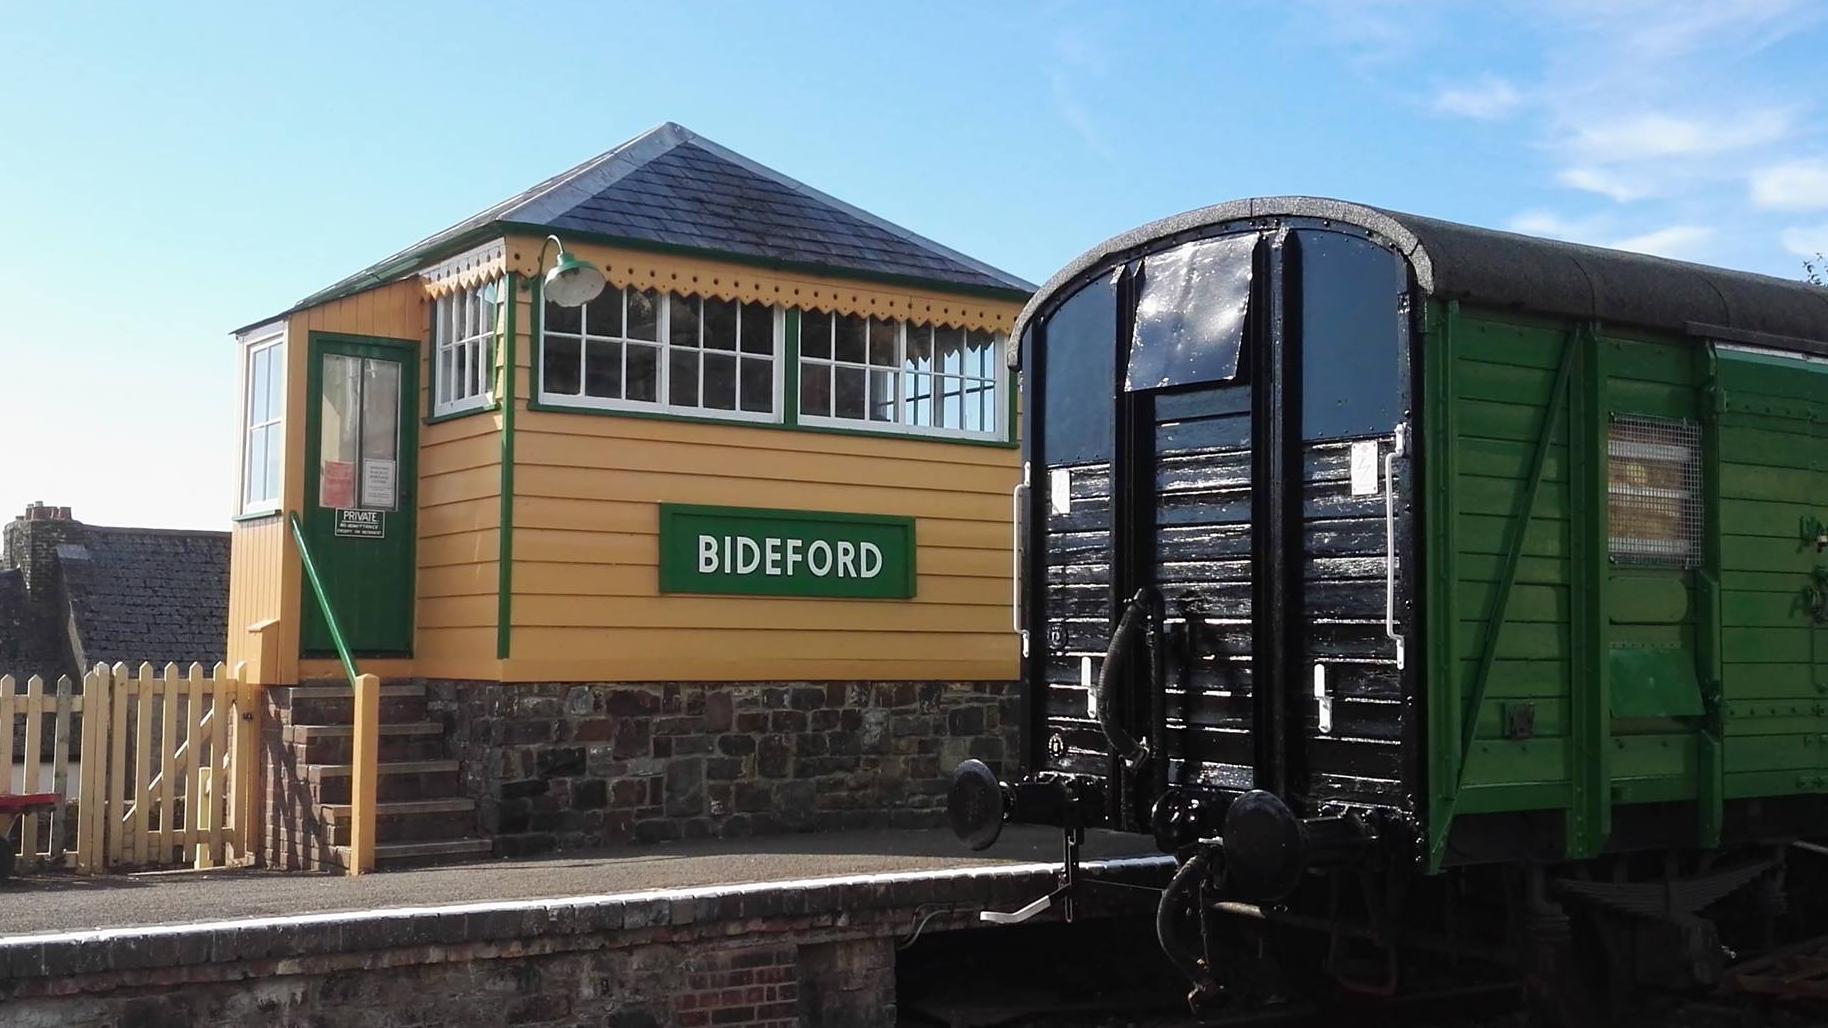 Bideford Railway Heritage Centre